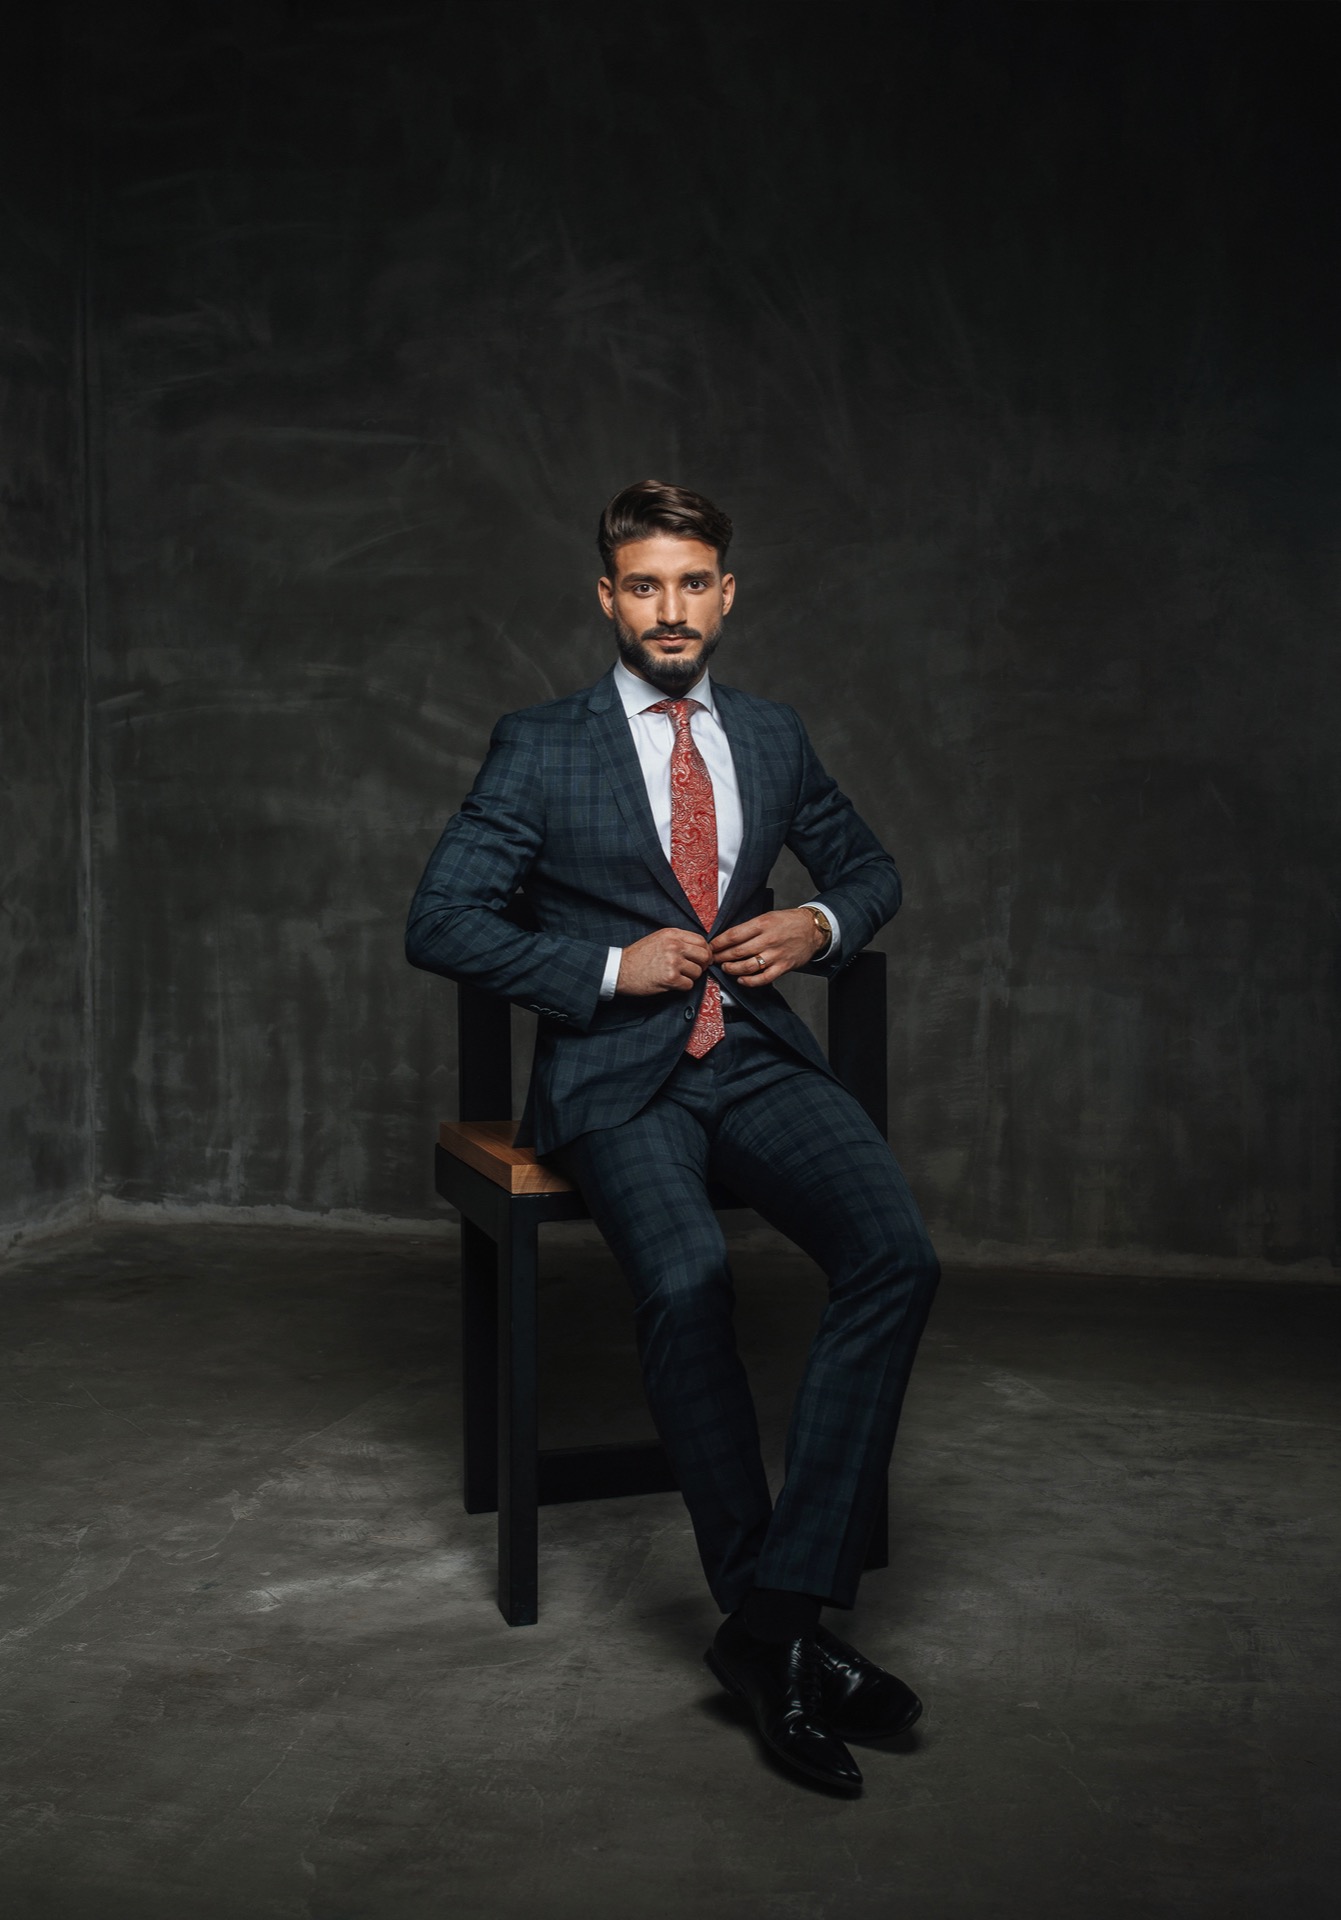 brunette handsome man in a suit on a dark background